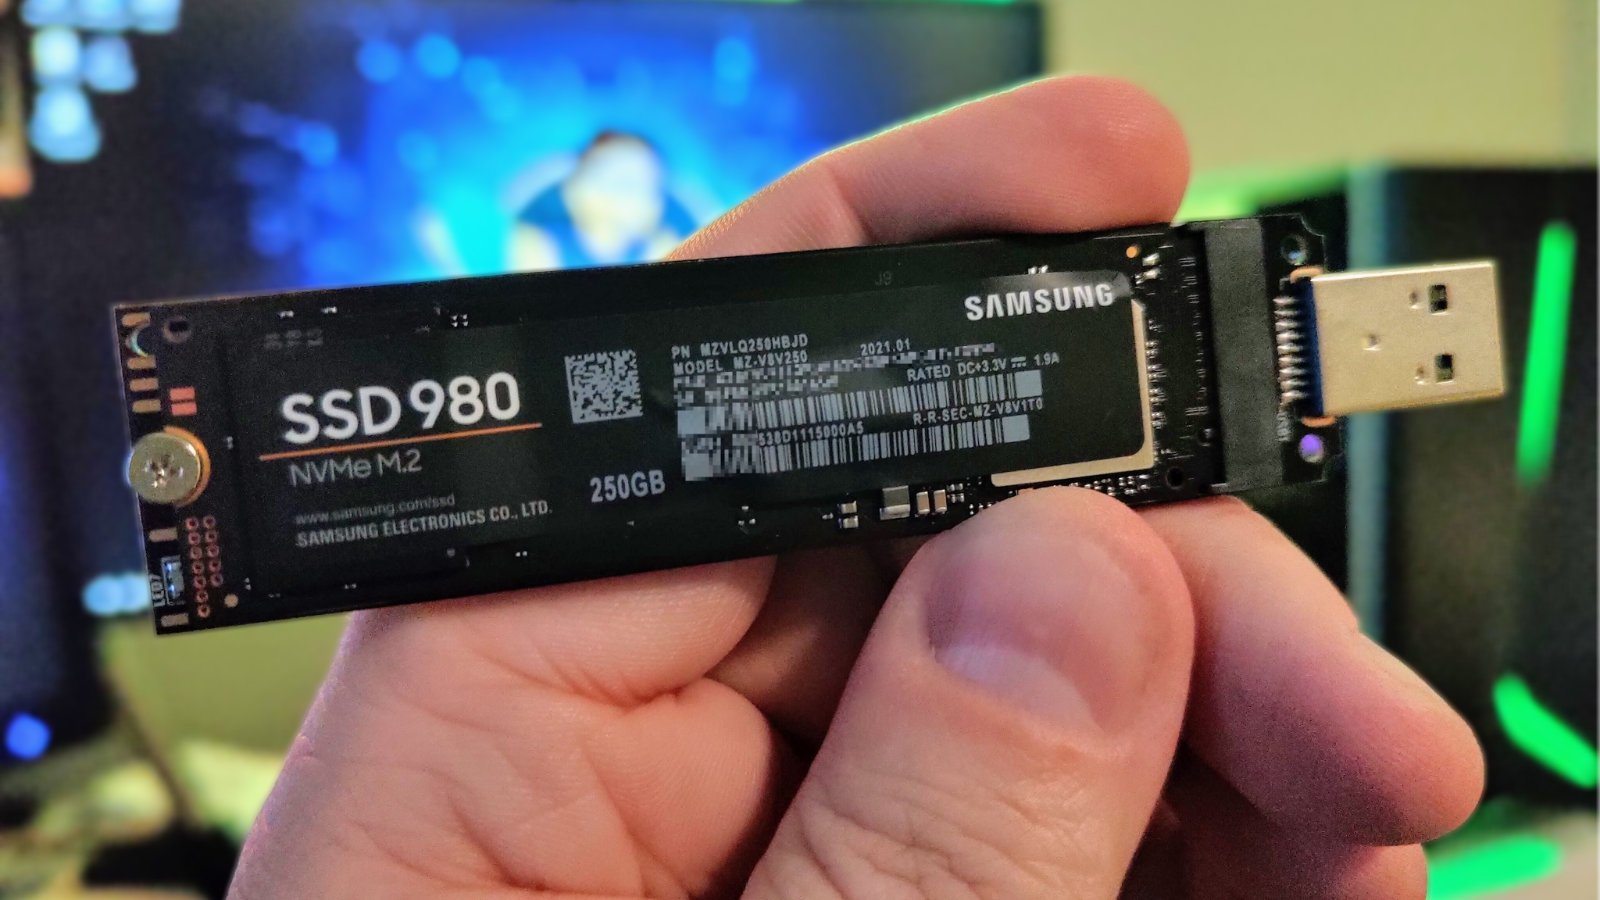 Samsung New Ssd 980 High Performance